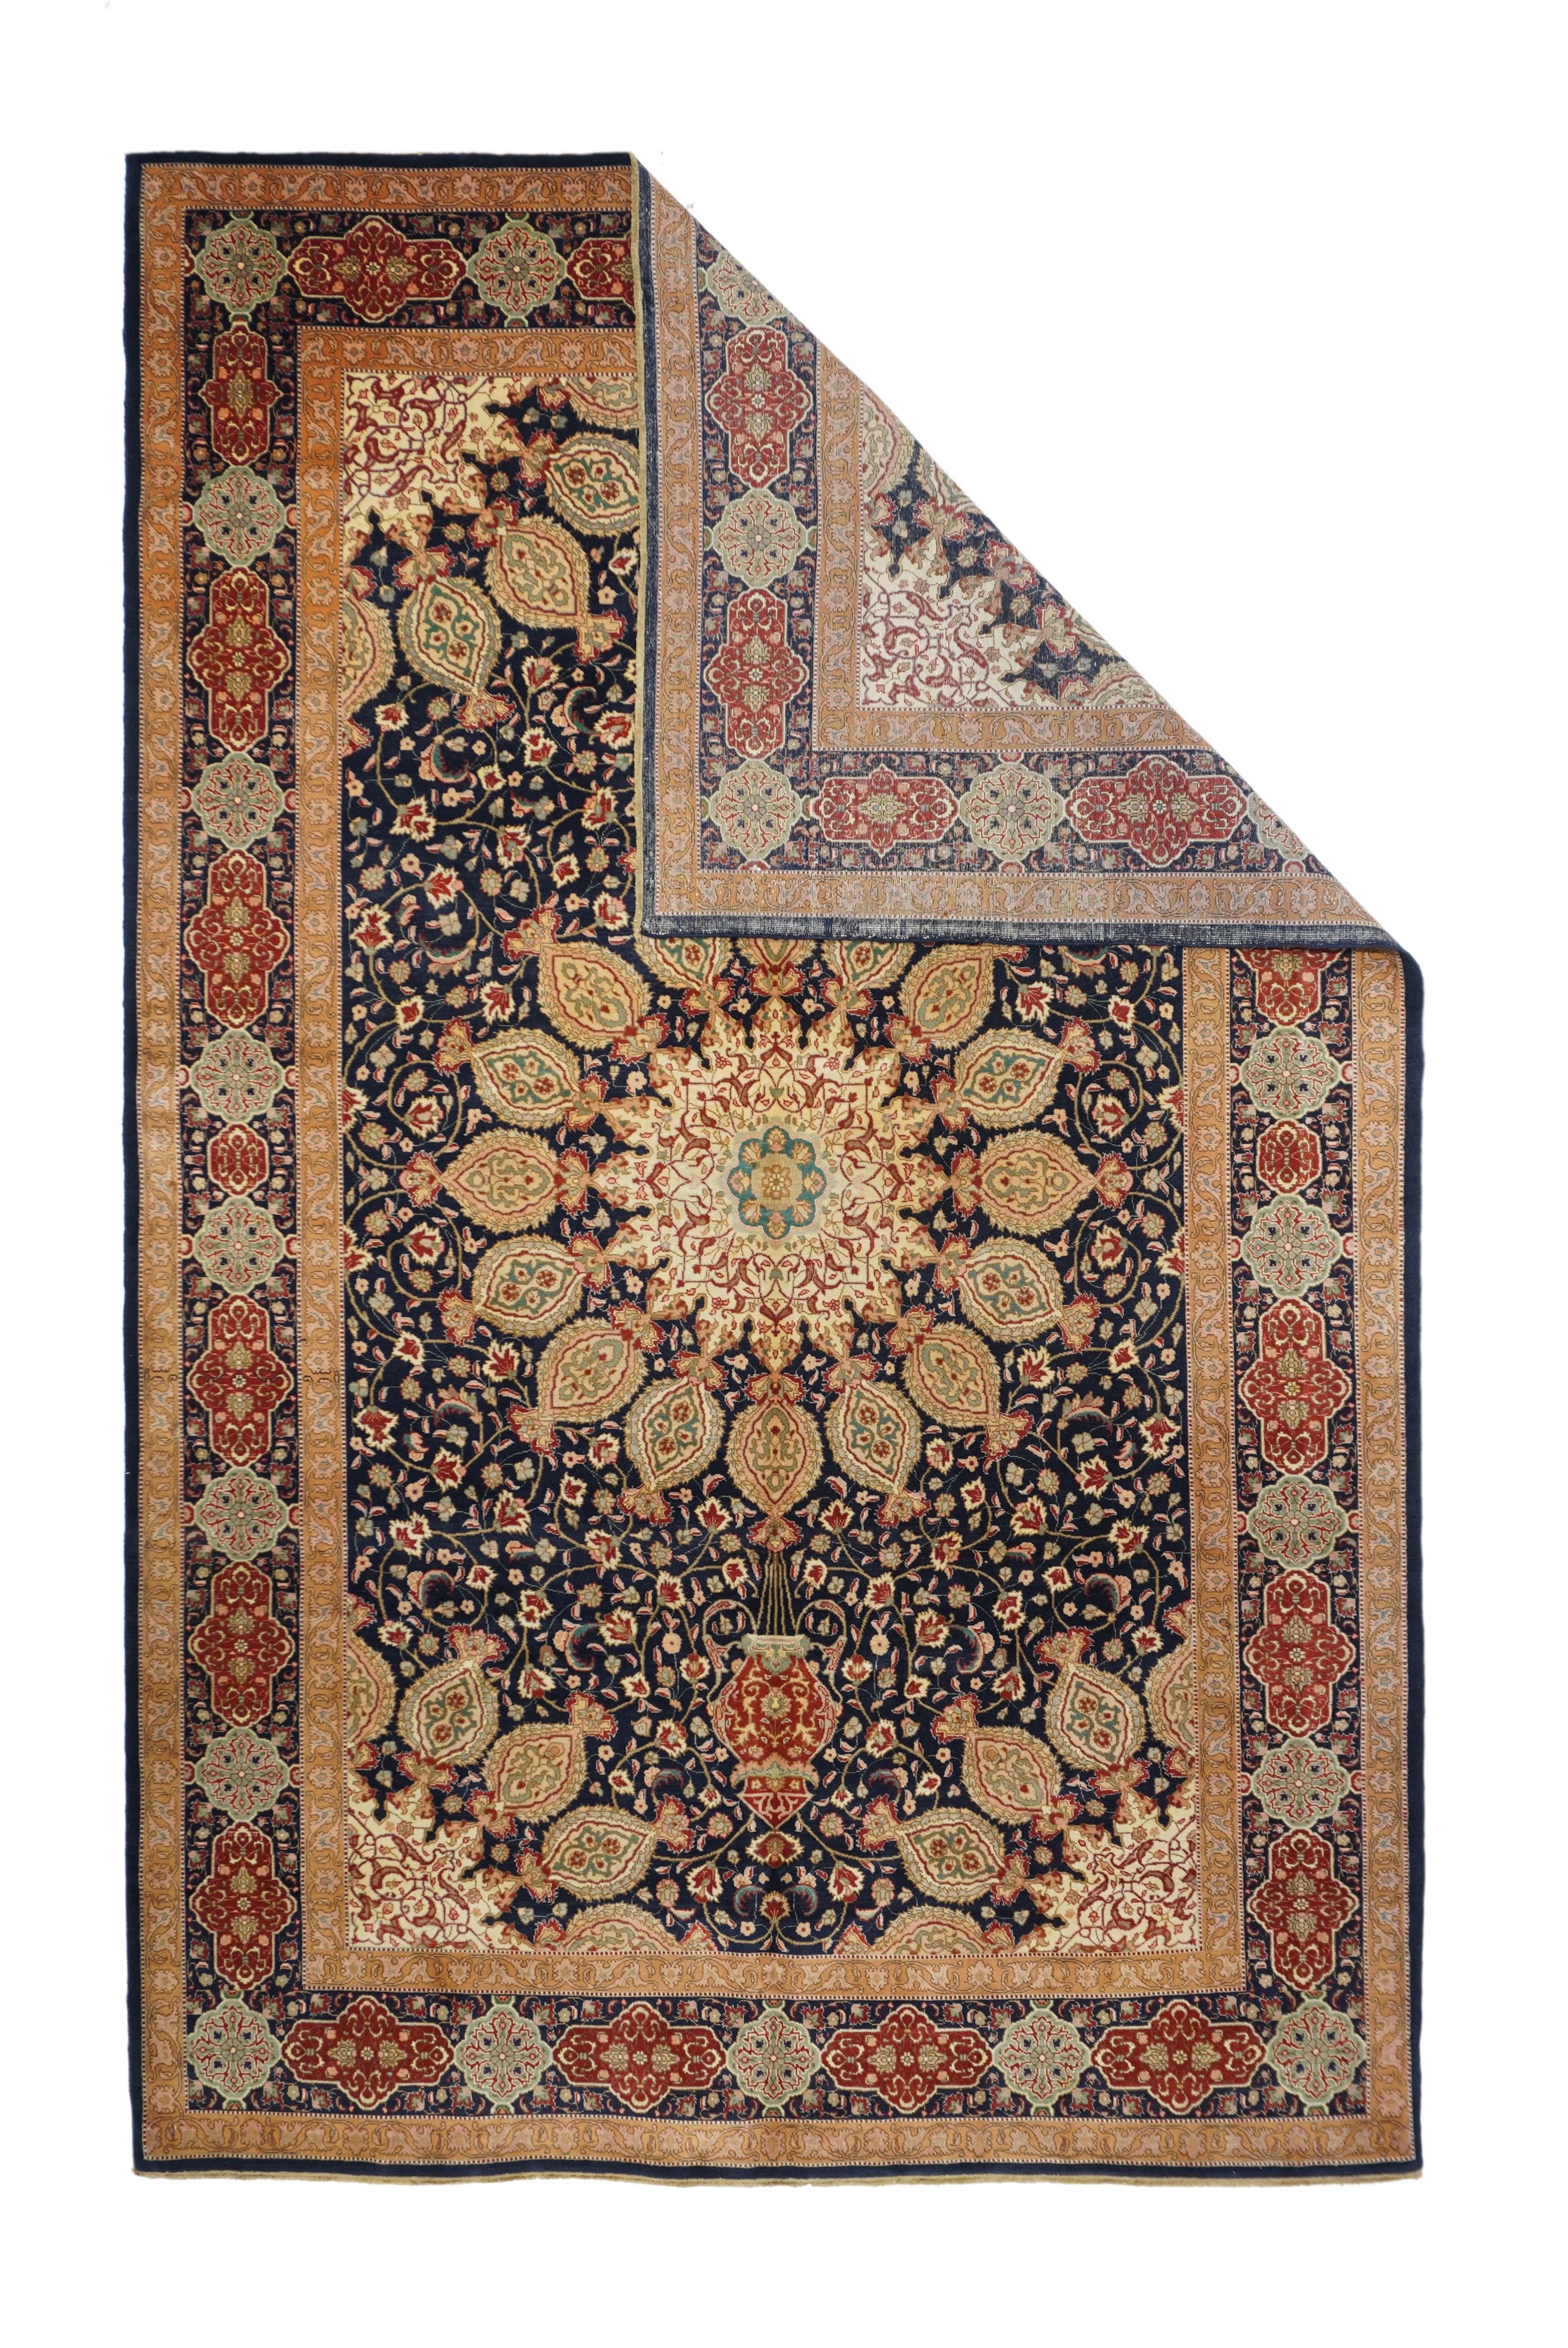 Vintage Tabriz rug¬†6'7'' x 10'1''. In the 